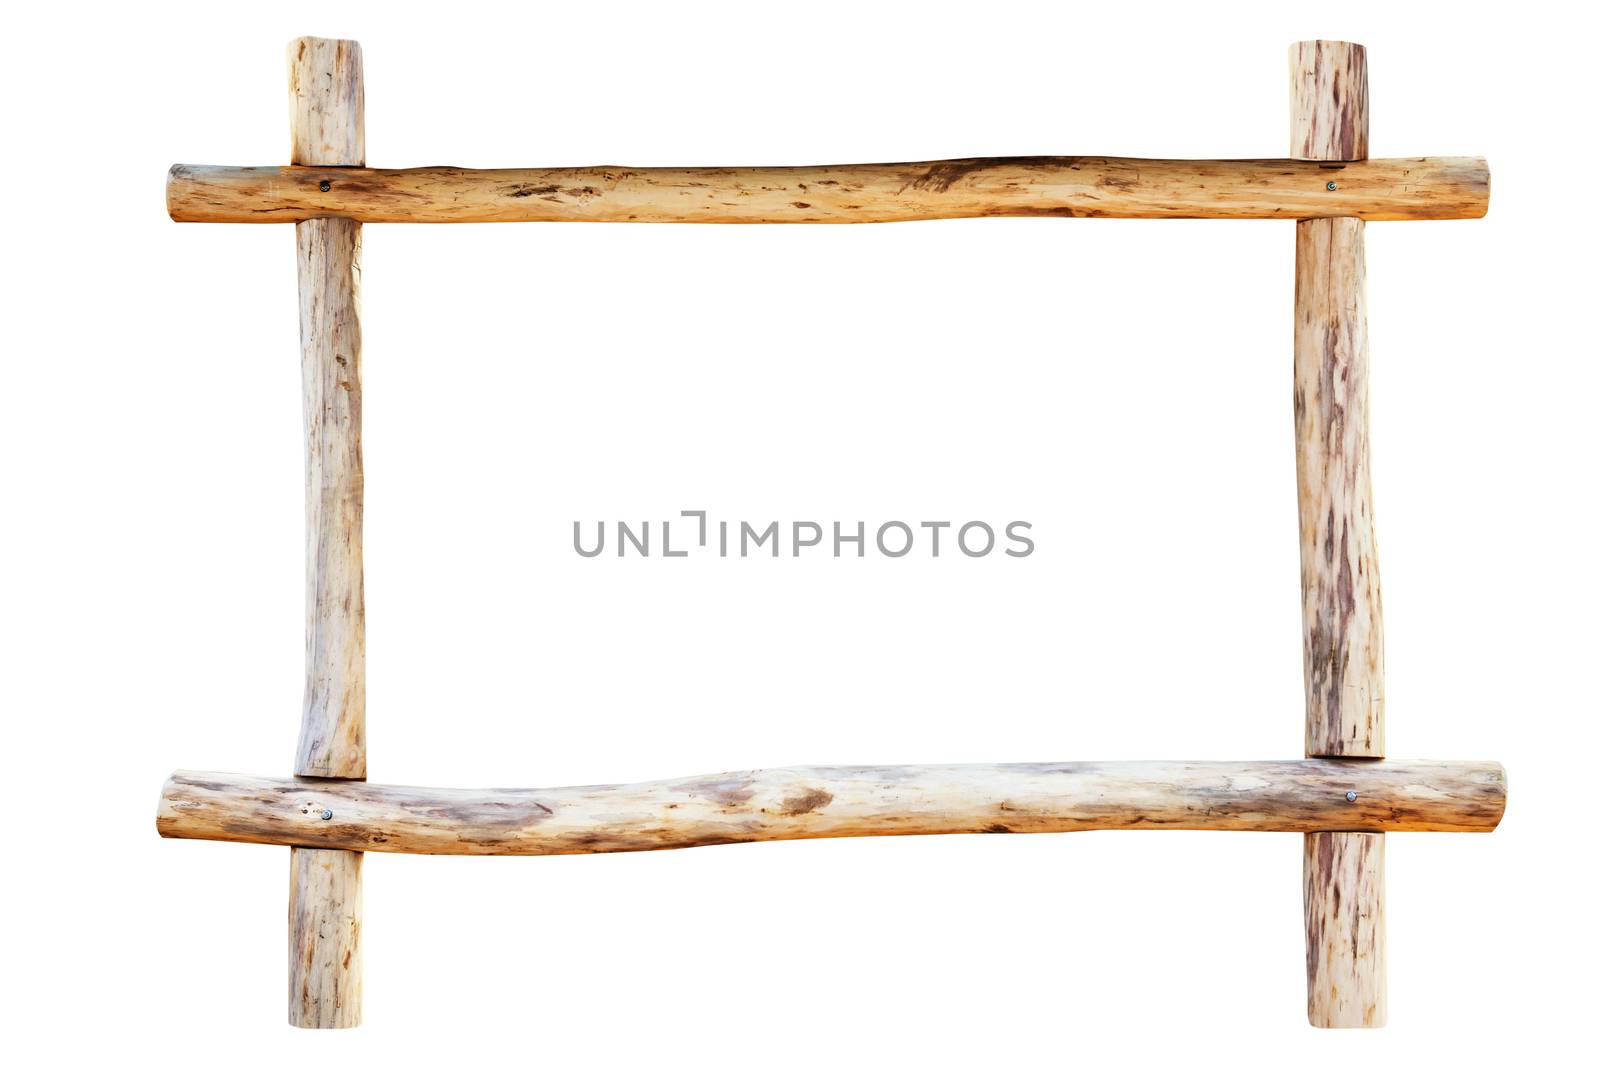 The frame made from oak logs by vapi